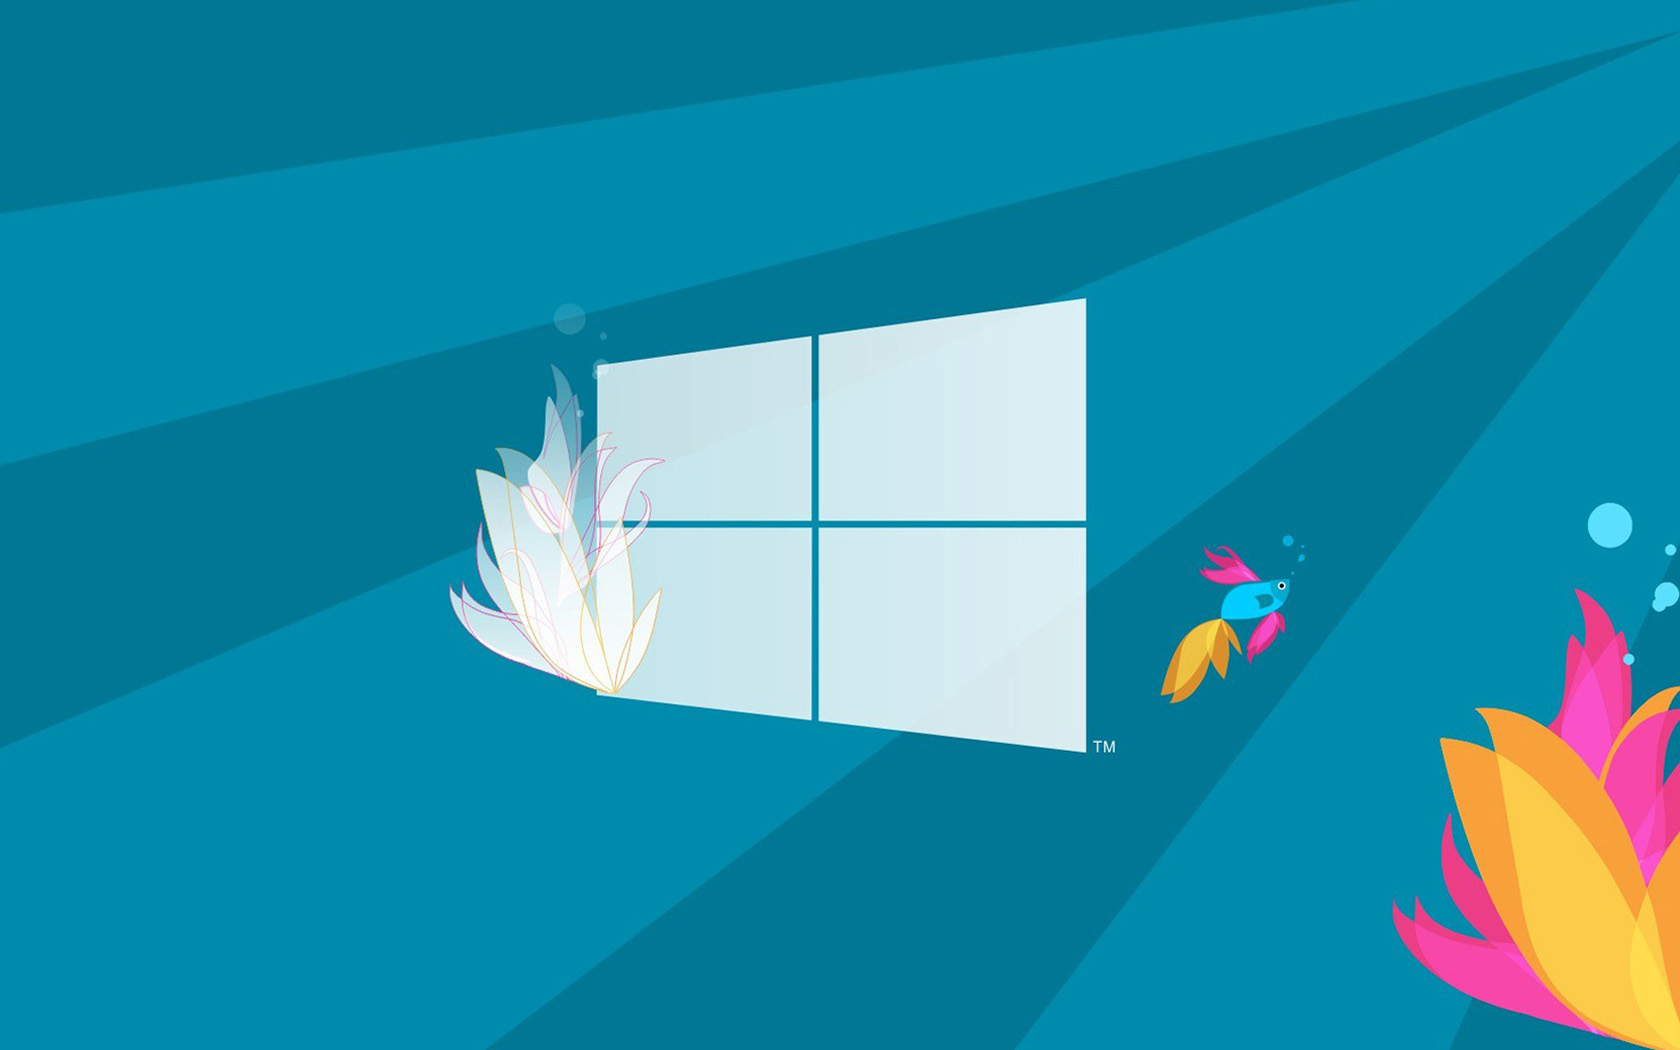 Windows 8 official minimalist wallpaper HD Wallpaper Downloads